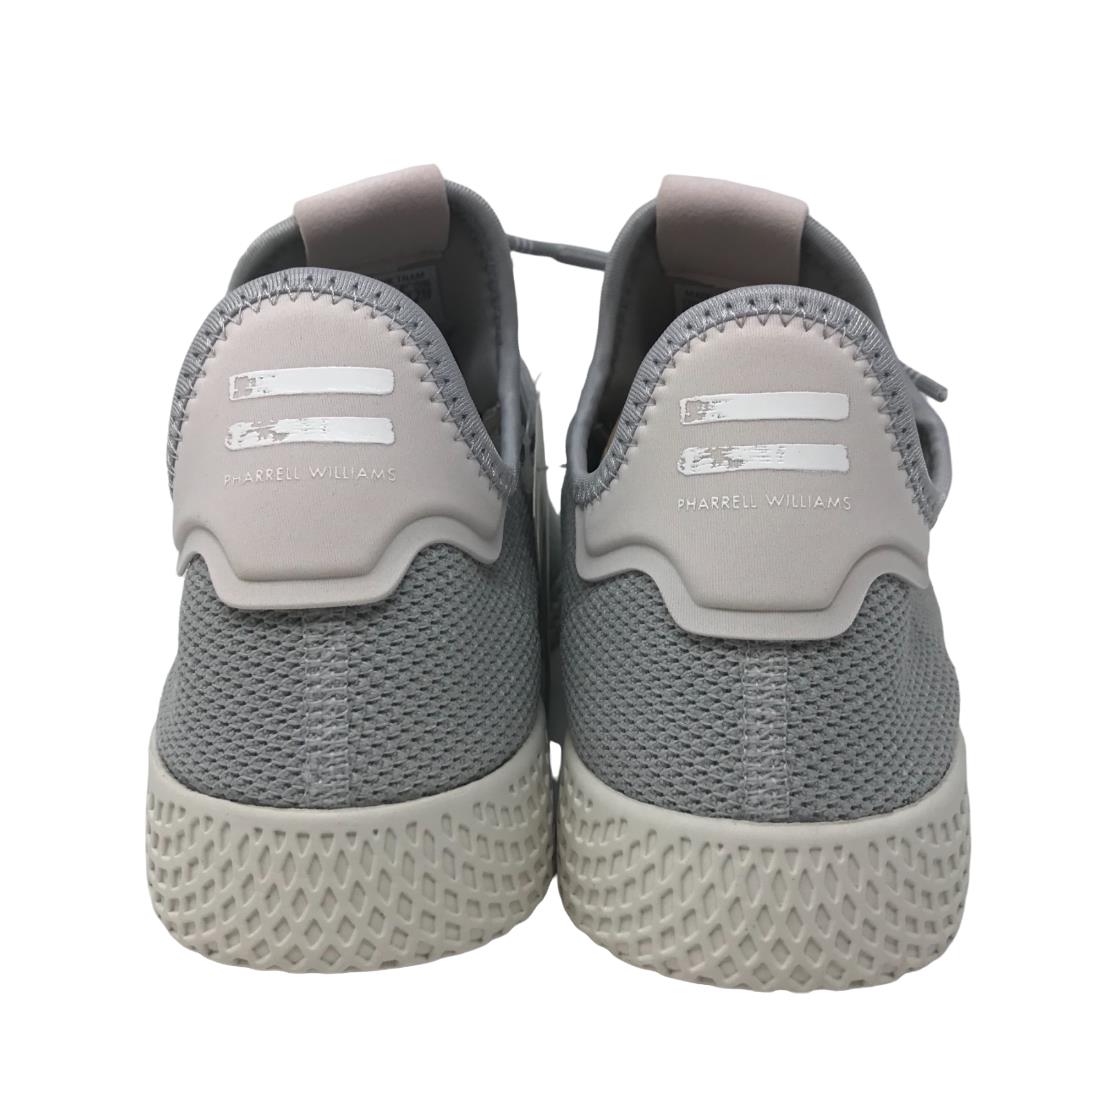 Adidas shoes  - Carbon/Chalk White 2